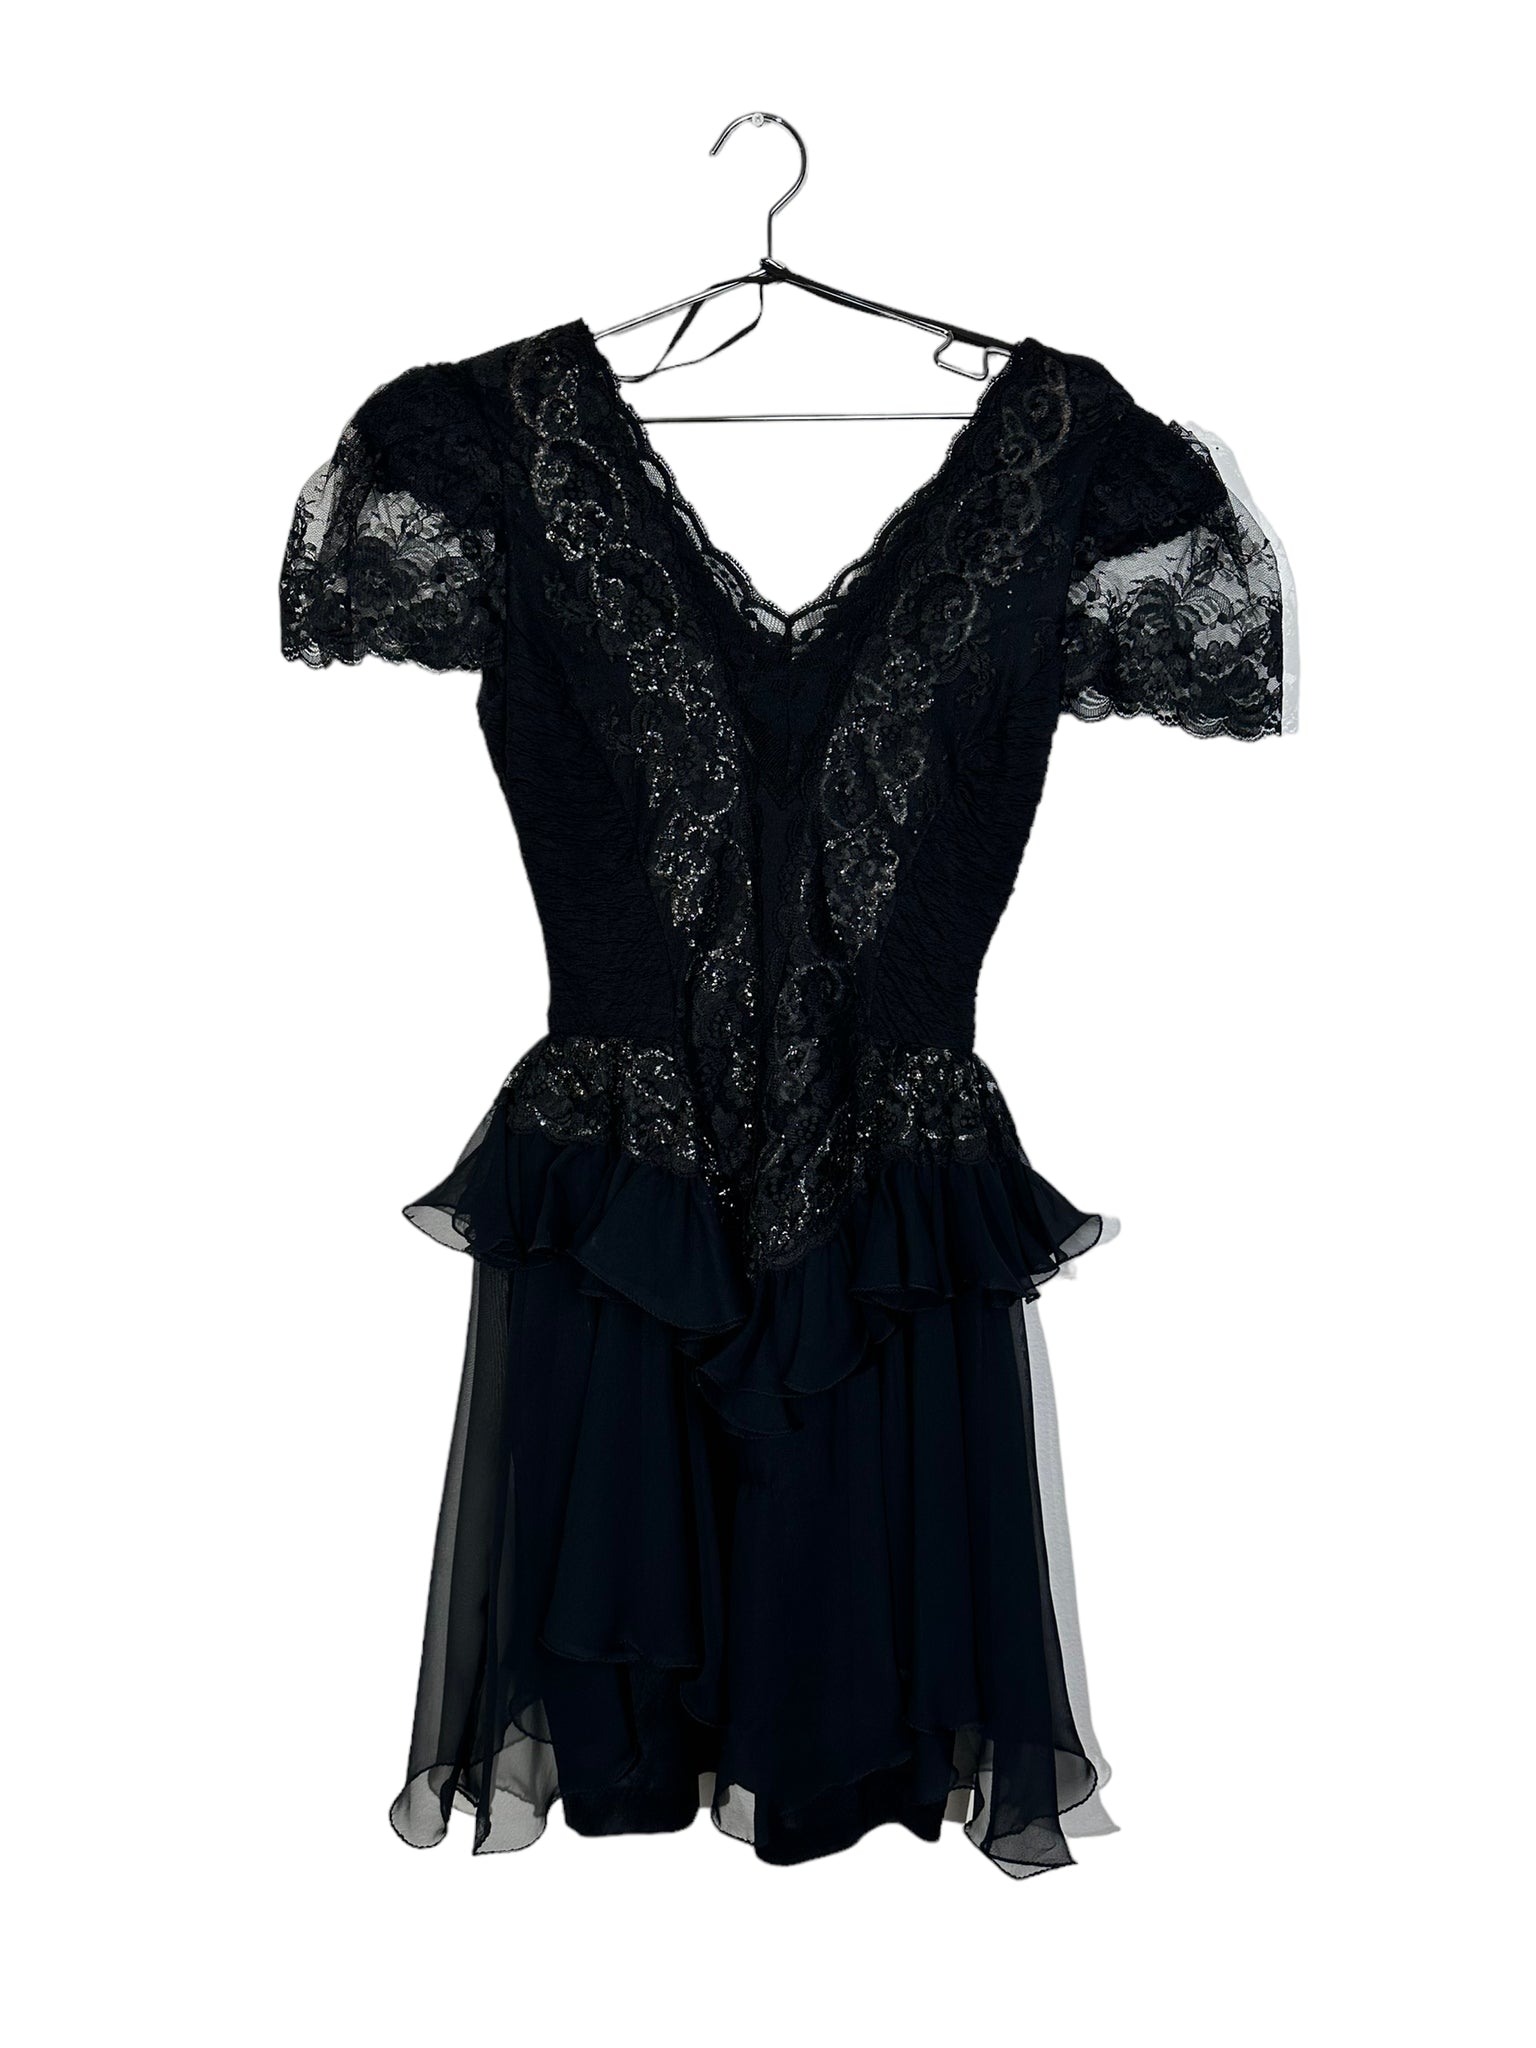 Black Evening Chic Vintage Dress